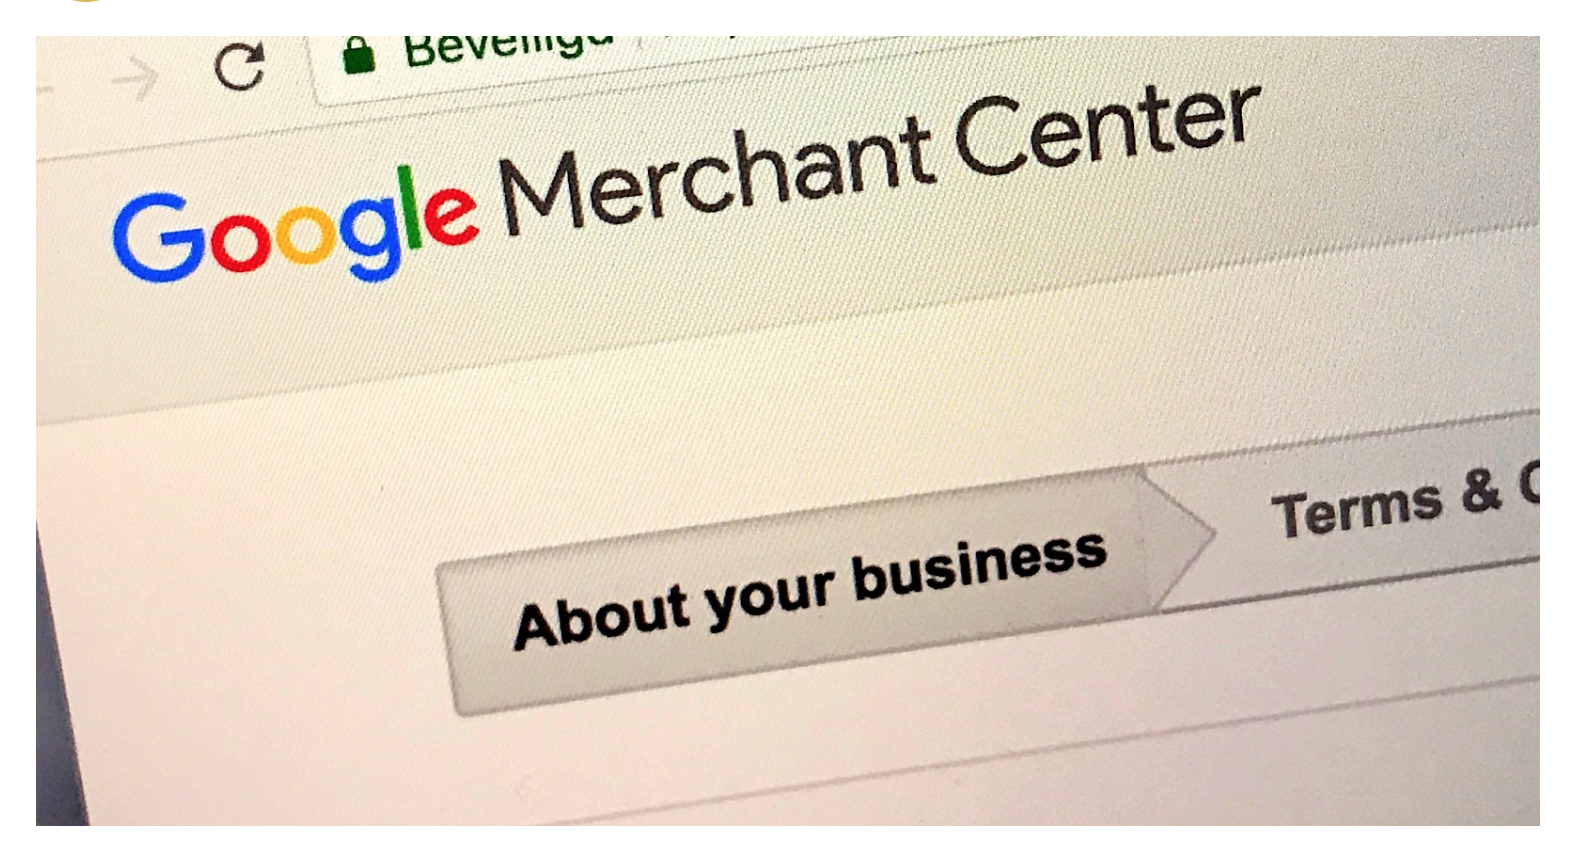 Google Merchant Center: About your business